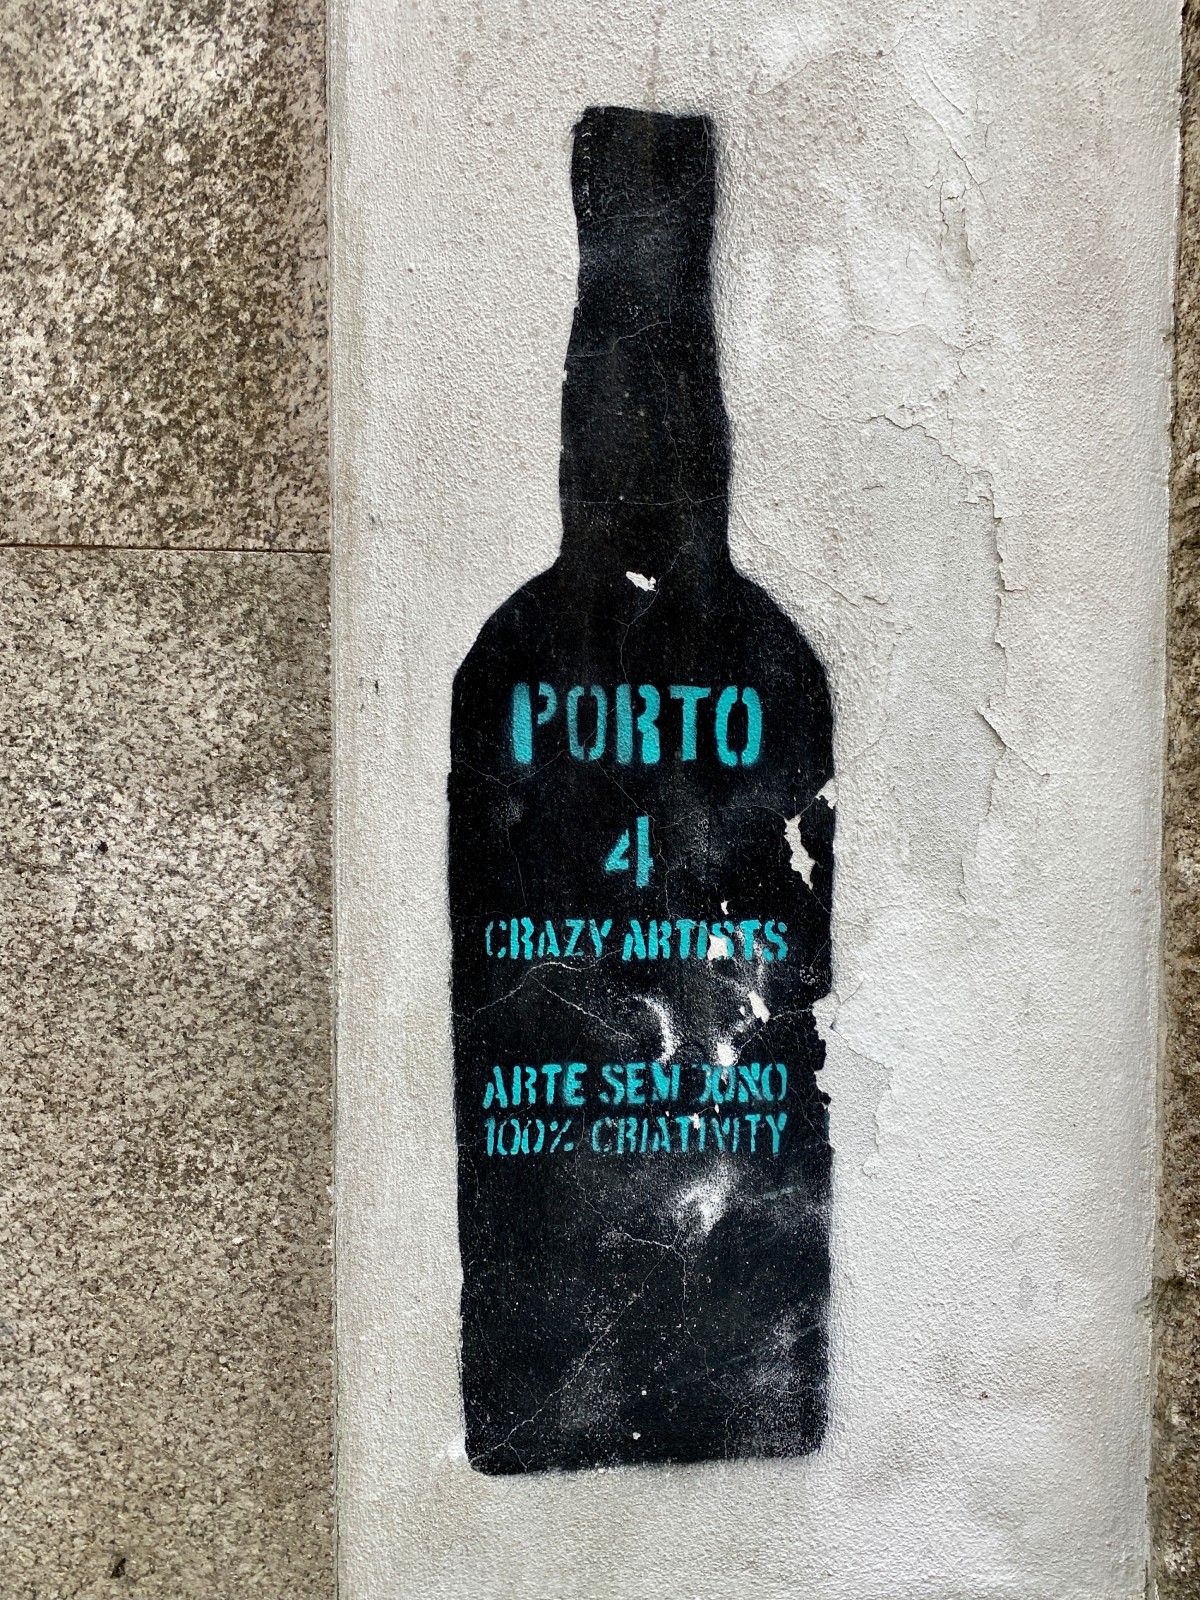 Porto has such fun street art